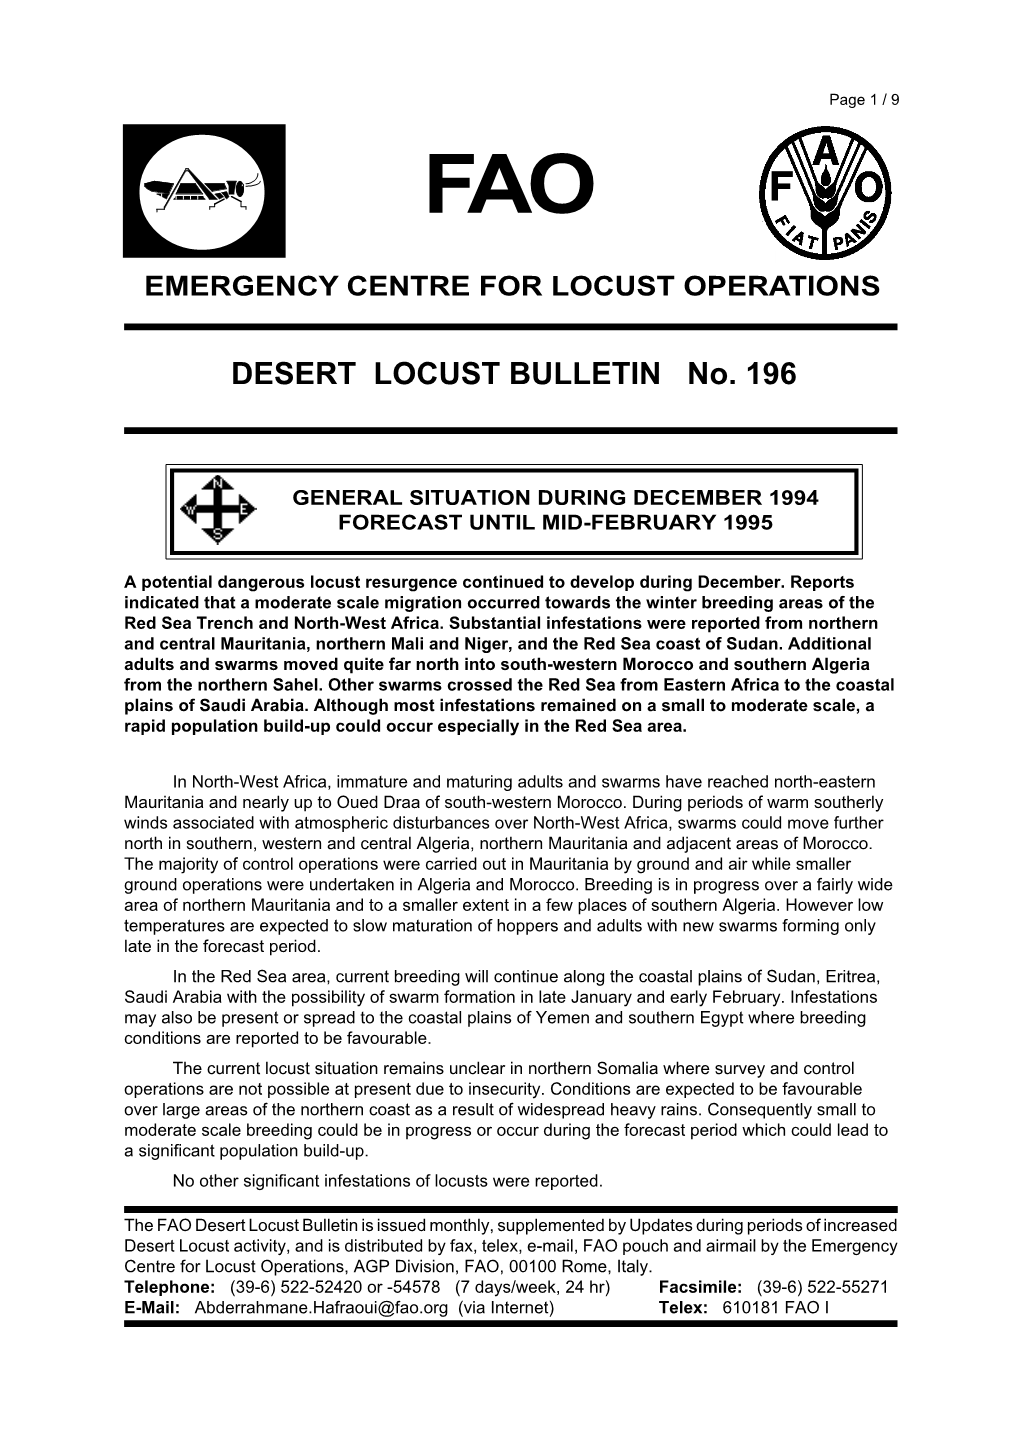 FAO Desert Locust Bulletin 196 (English)